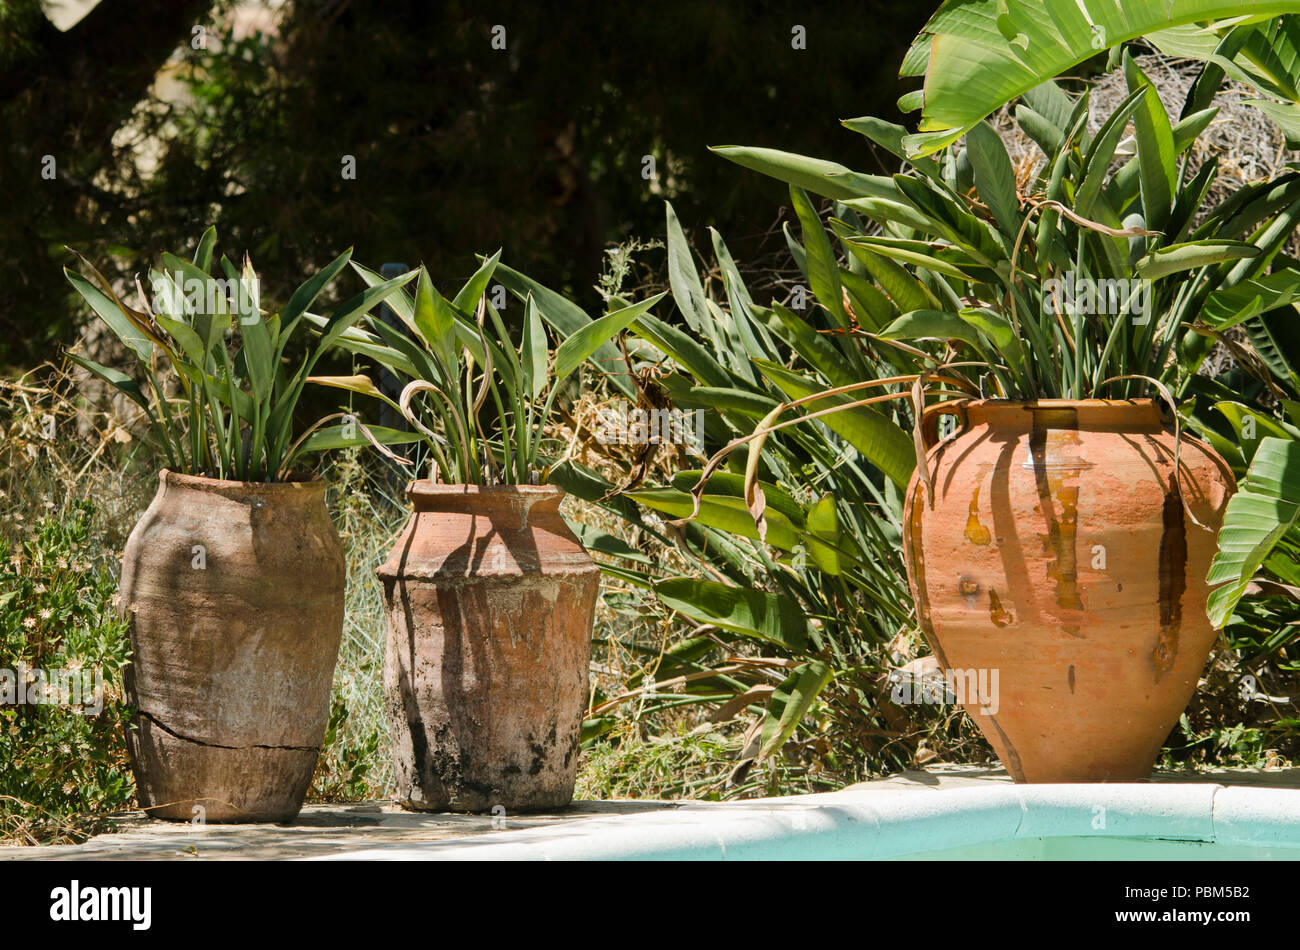 Mediterranean terracotta plant pots with Strelitzia, Bird of Paradise plants in garden next to pool, Spain. Stock Photo